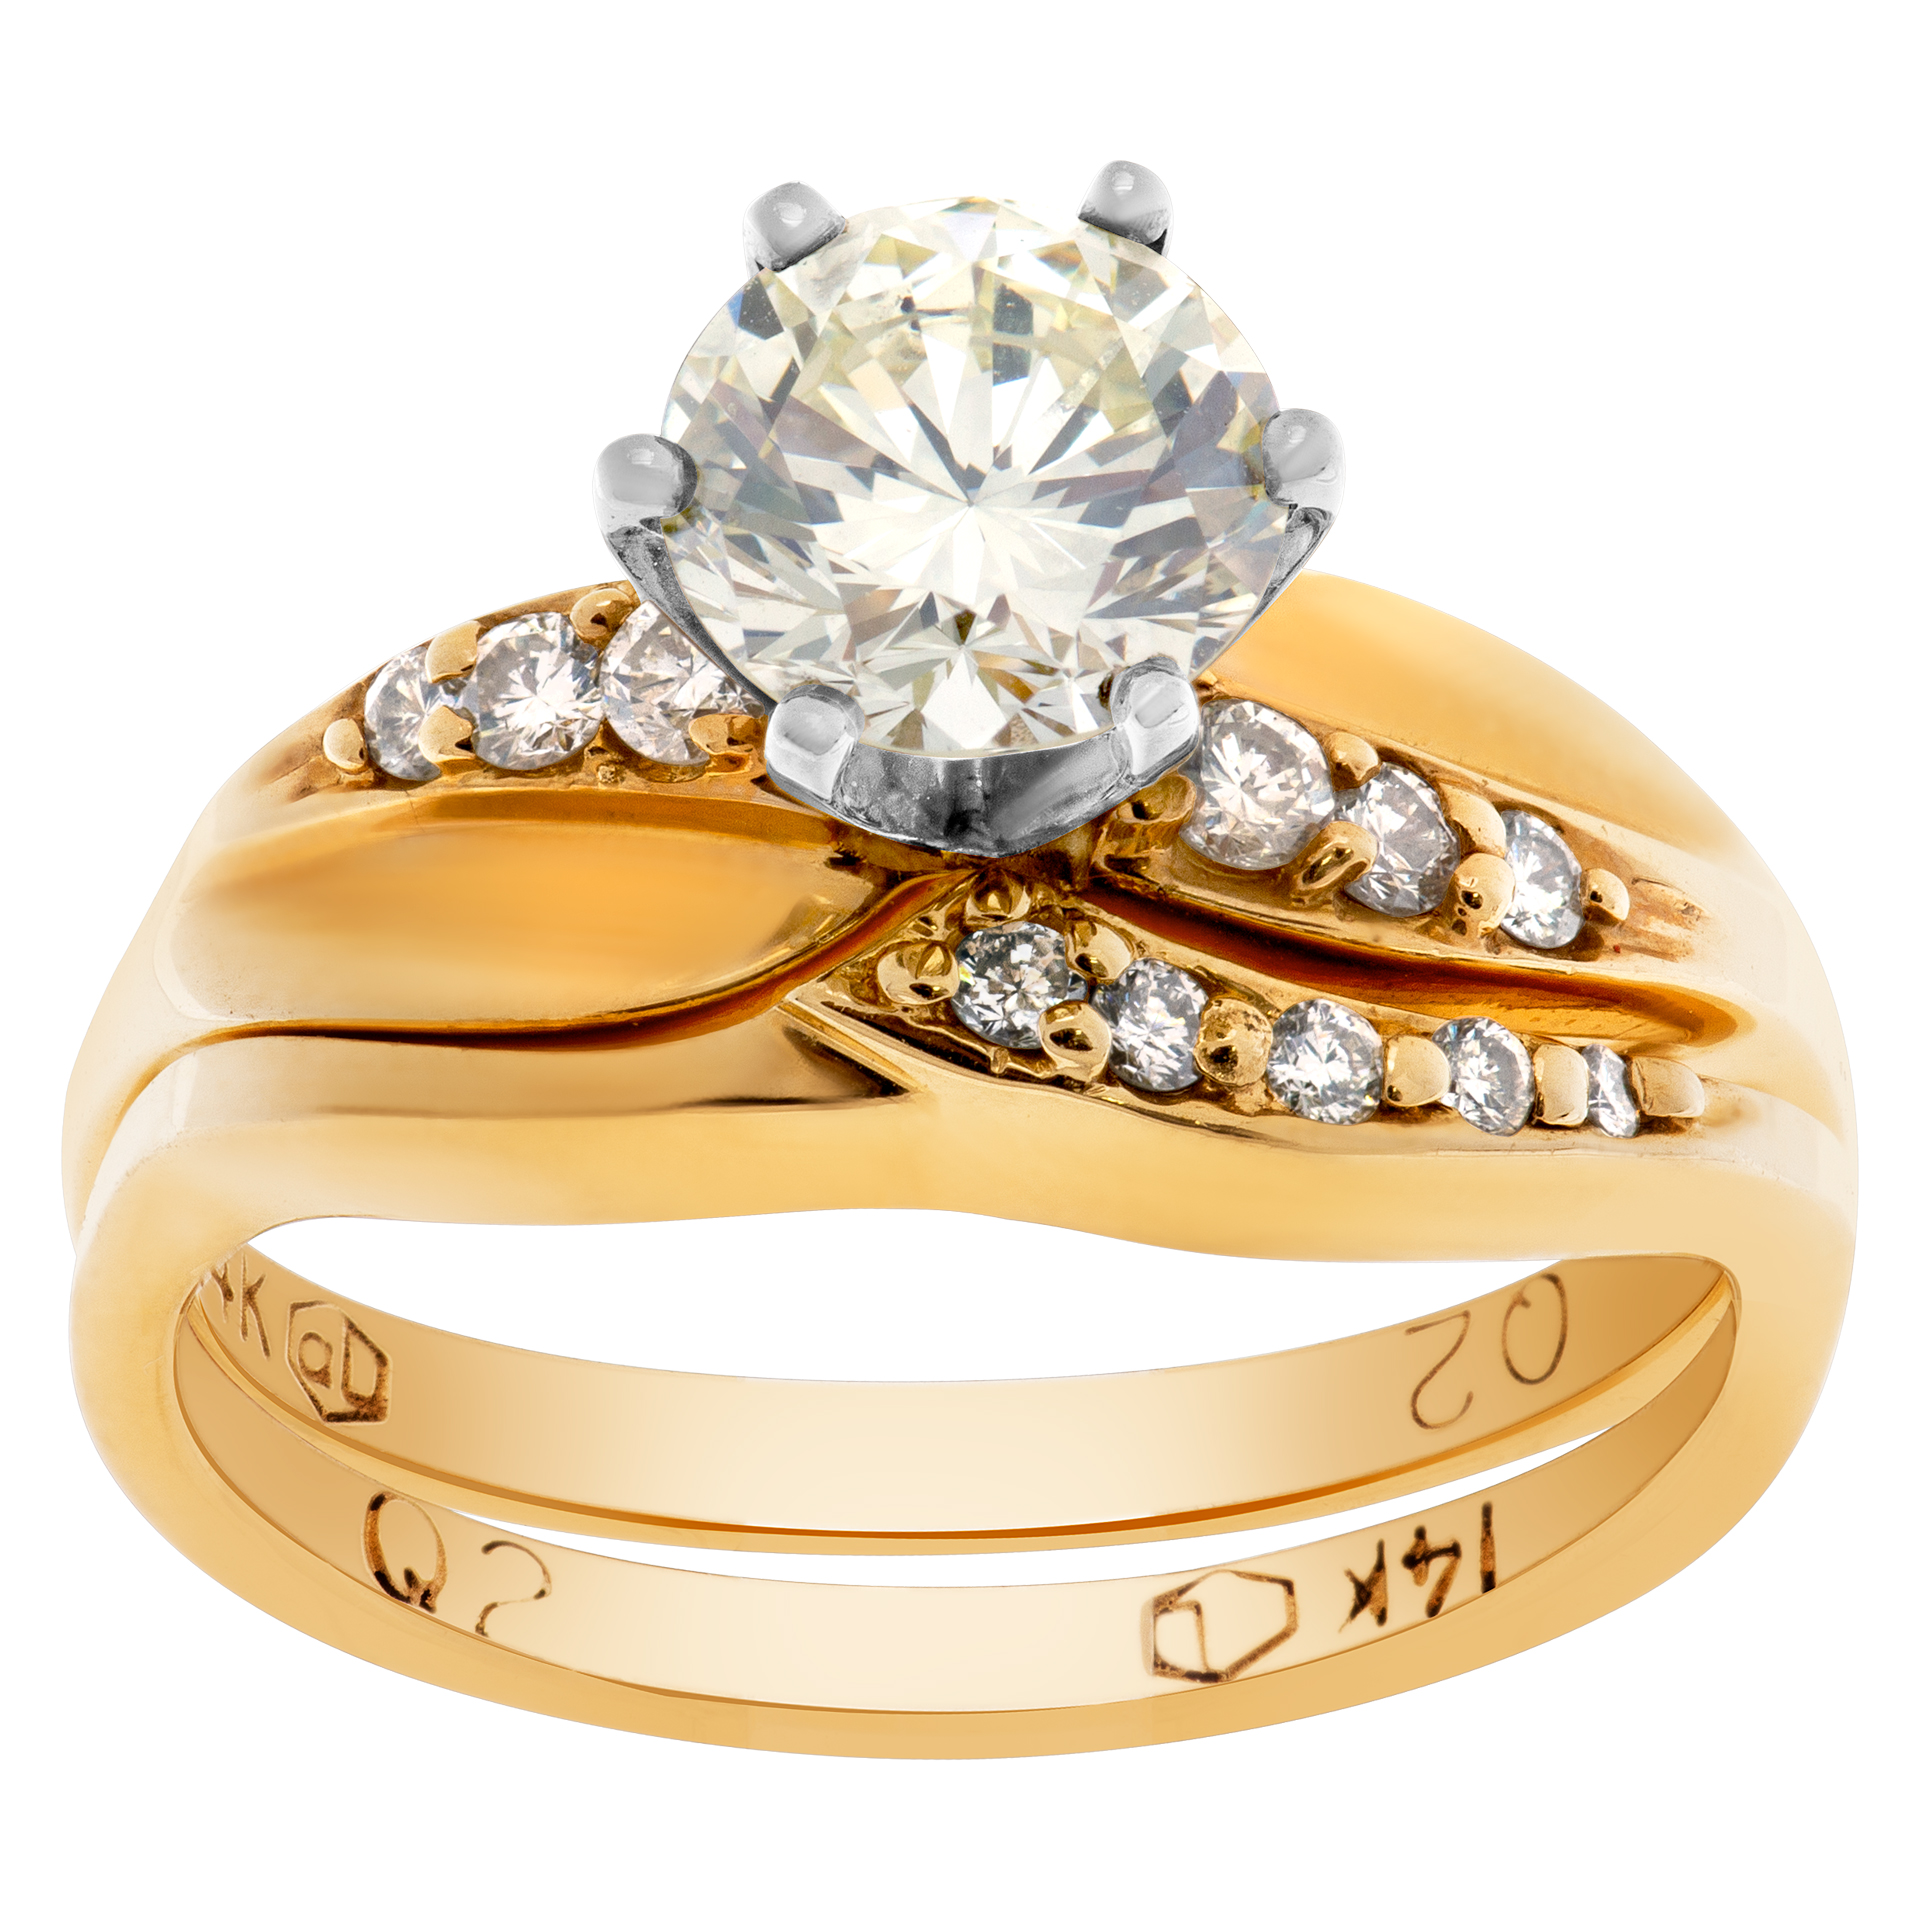 GIA certified round brilliant cut diamond 1.05 carat (W-X Color, VS-1 Clarity) ring